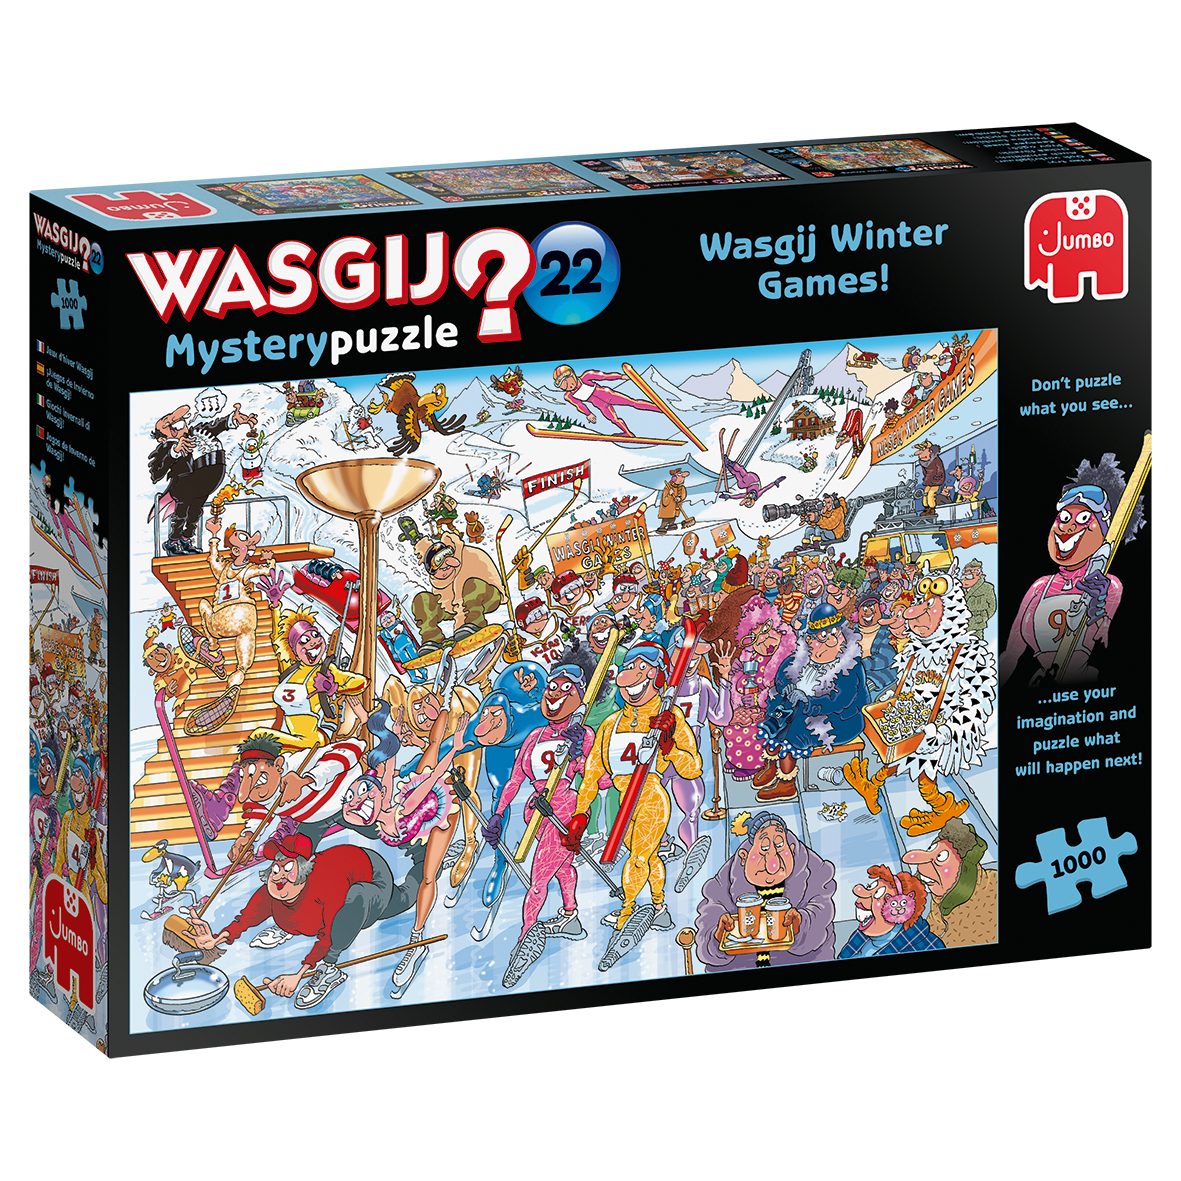 Puzzle Wasgij Mystery 22 Die Wasgij Winterspiele, 1000 Puzzleteile